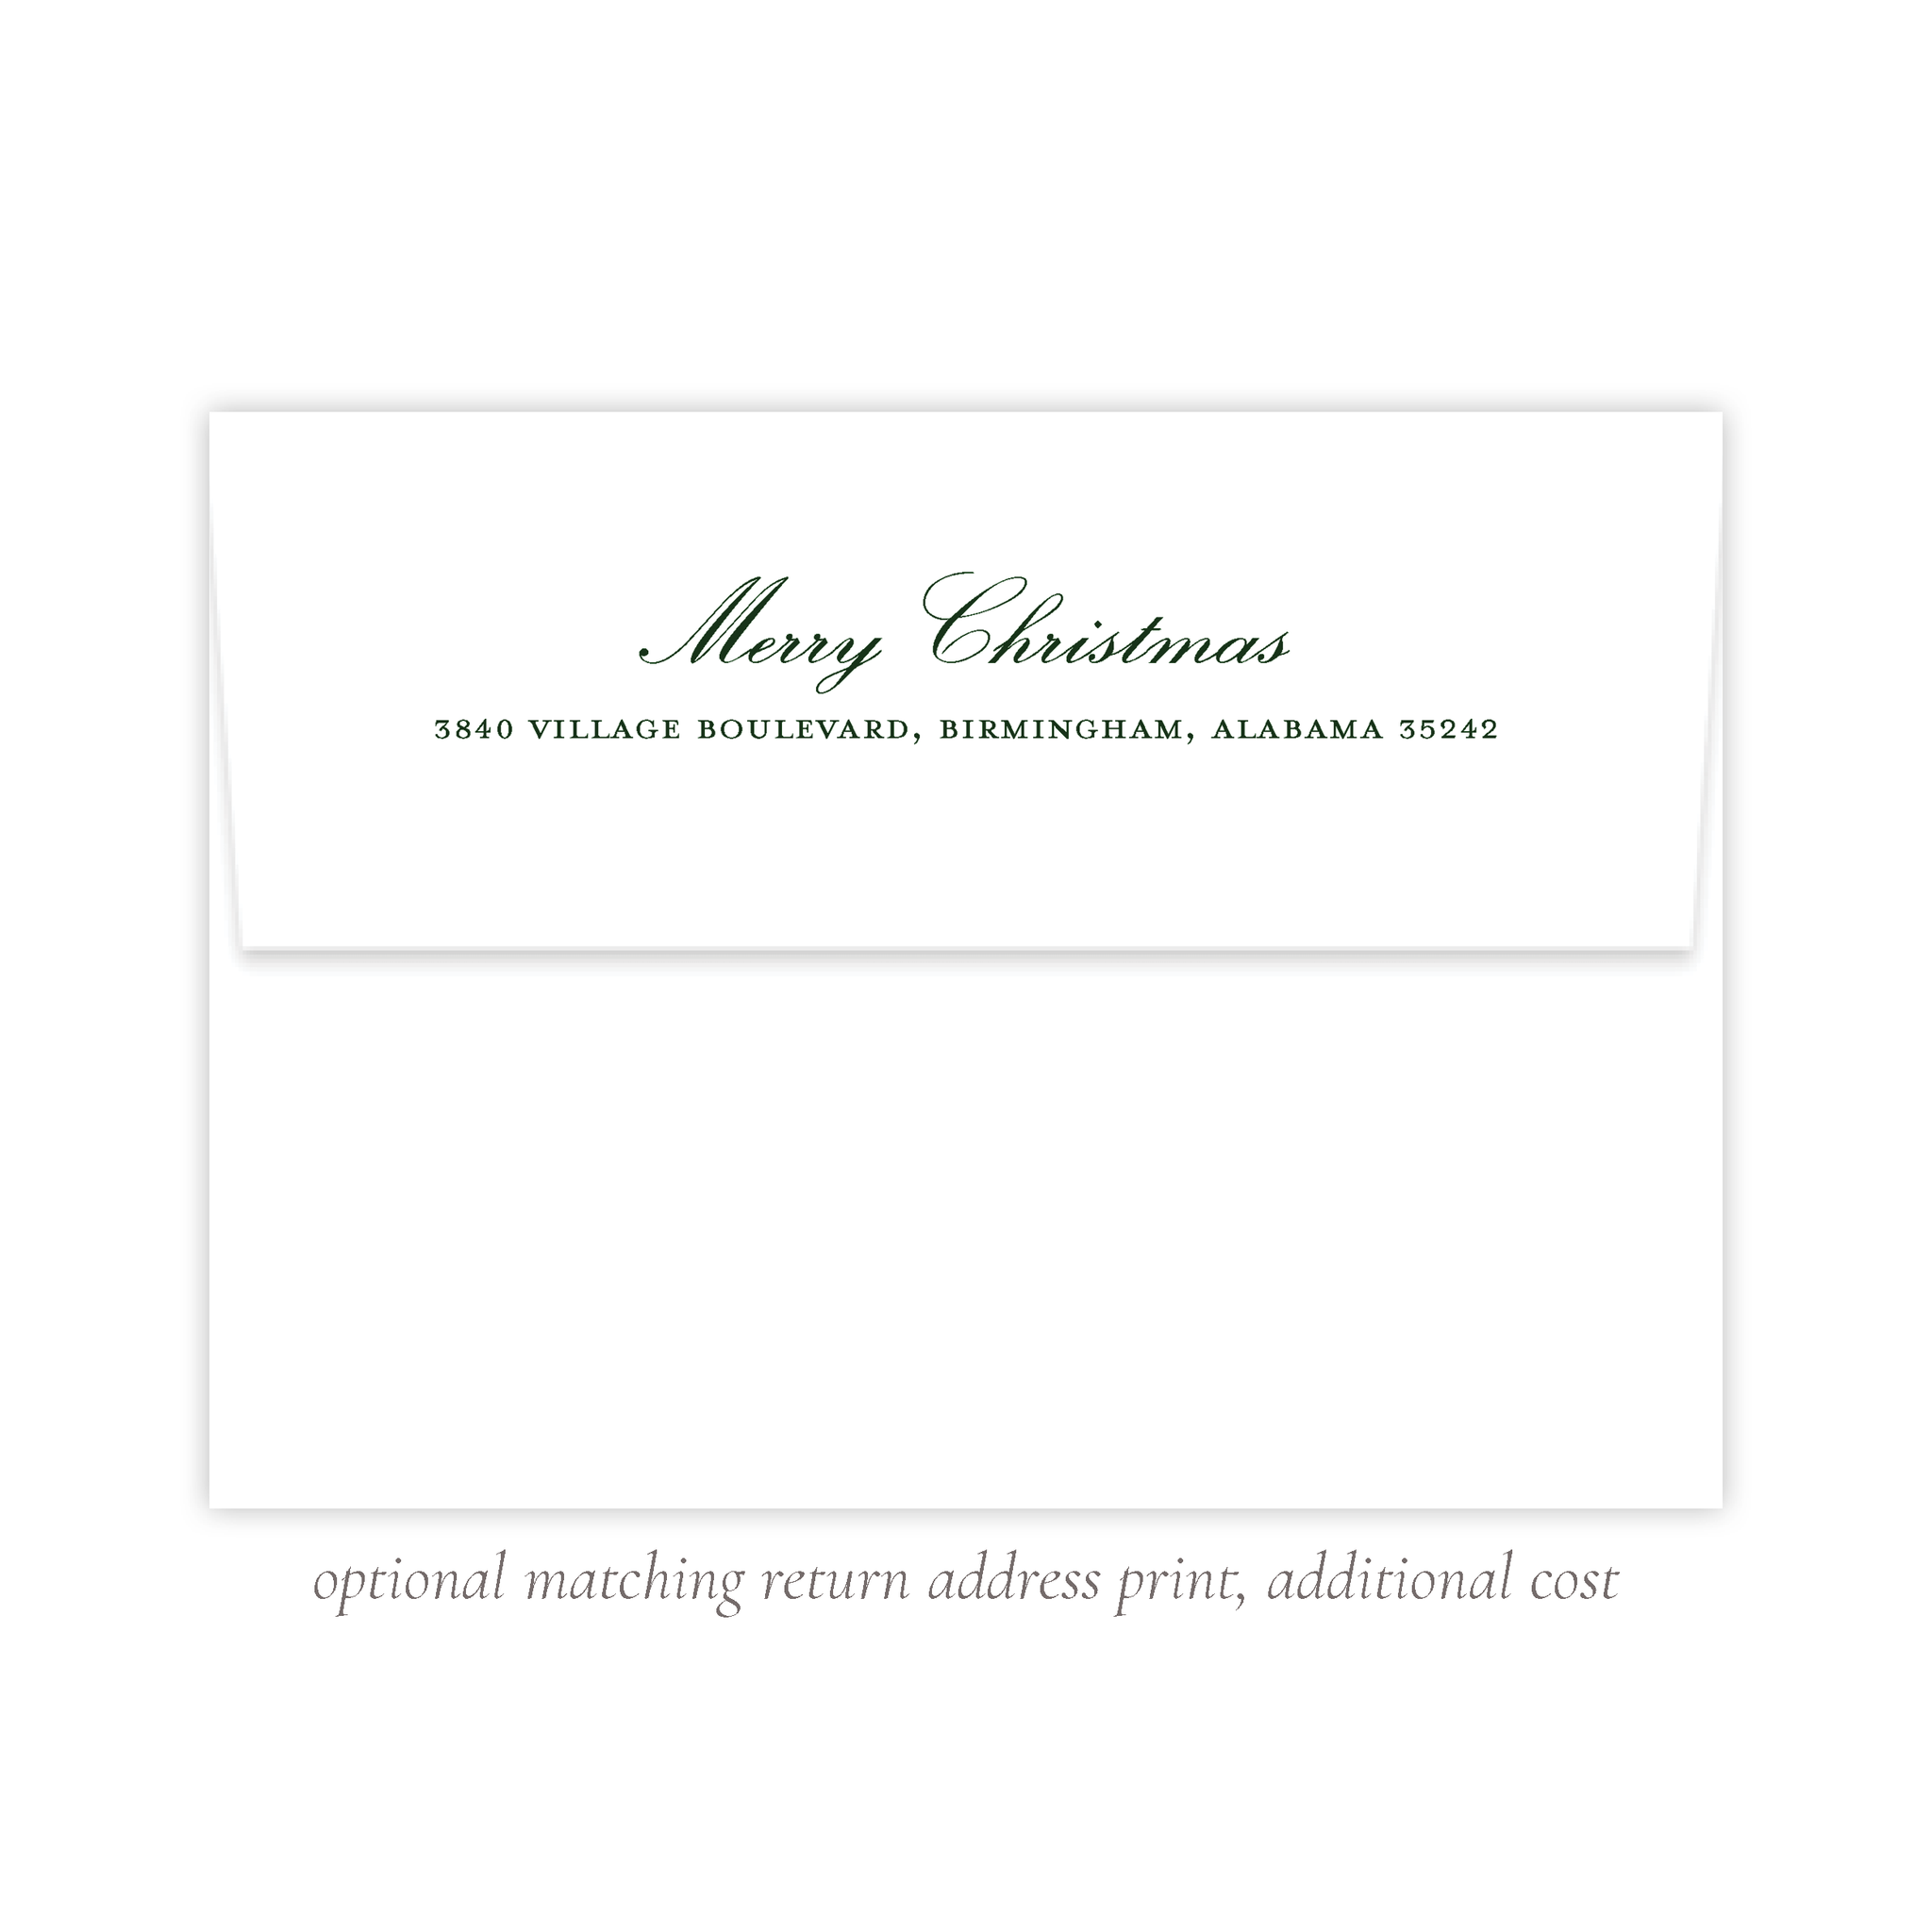 Melville Branch Christmas Return Address Print